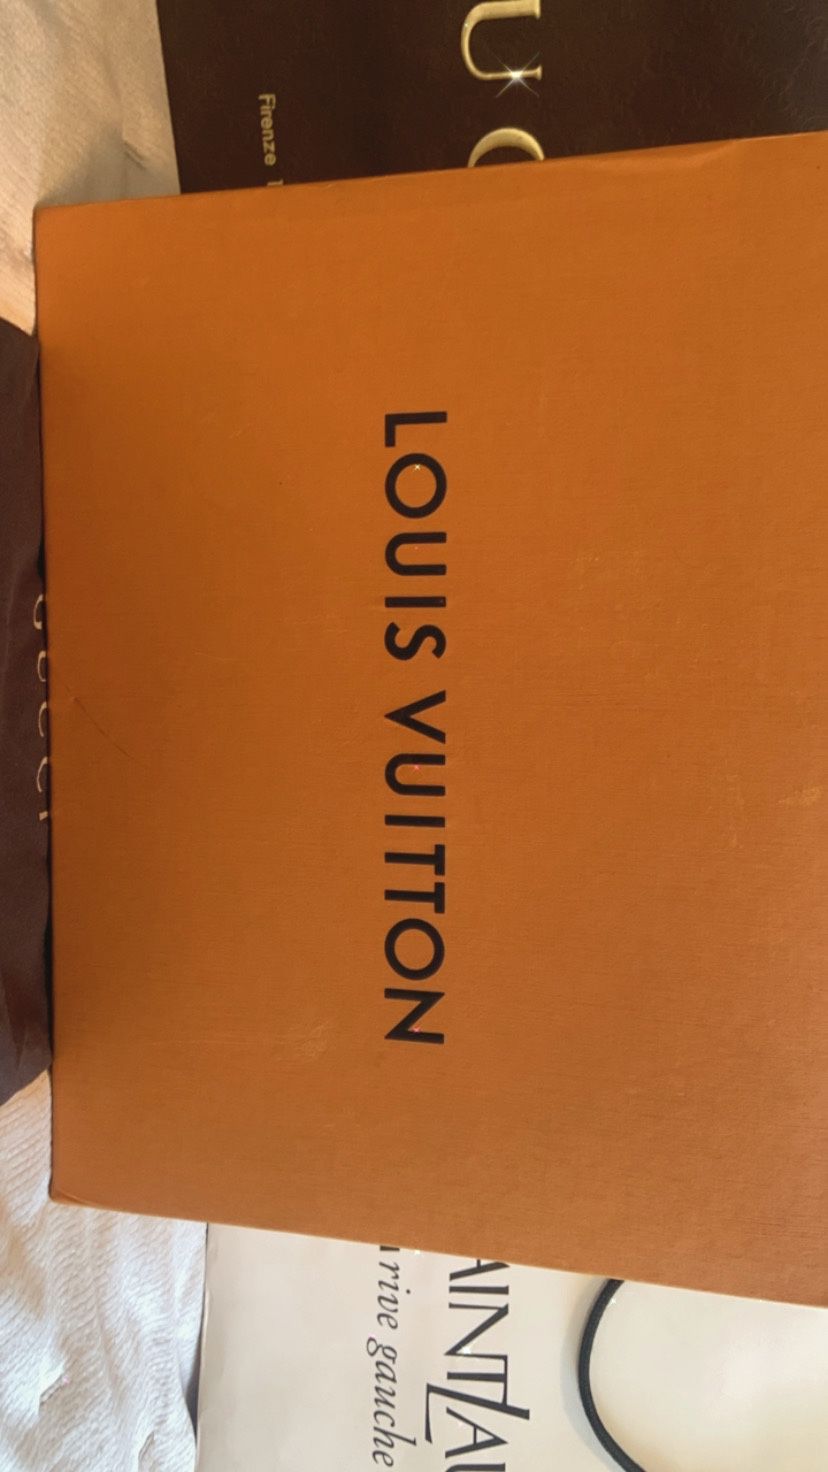 Louis Vuitton And Gucci Box for Sale in North Miami Beach, FL - OfferUp